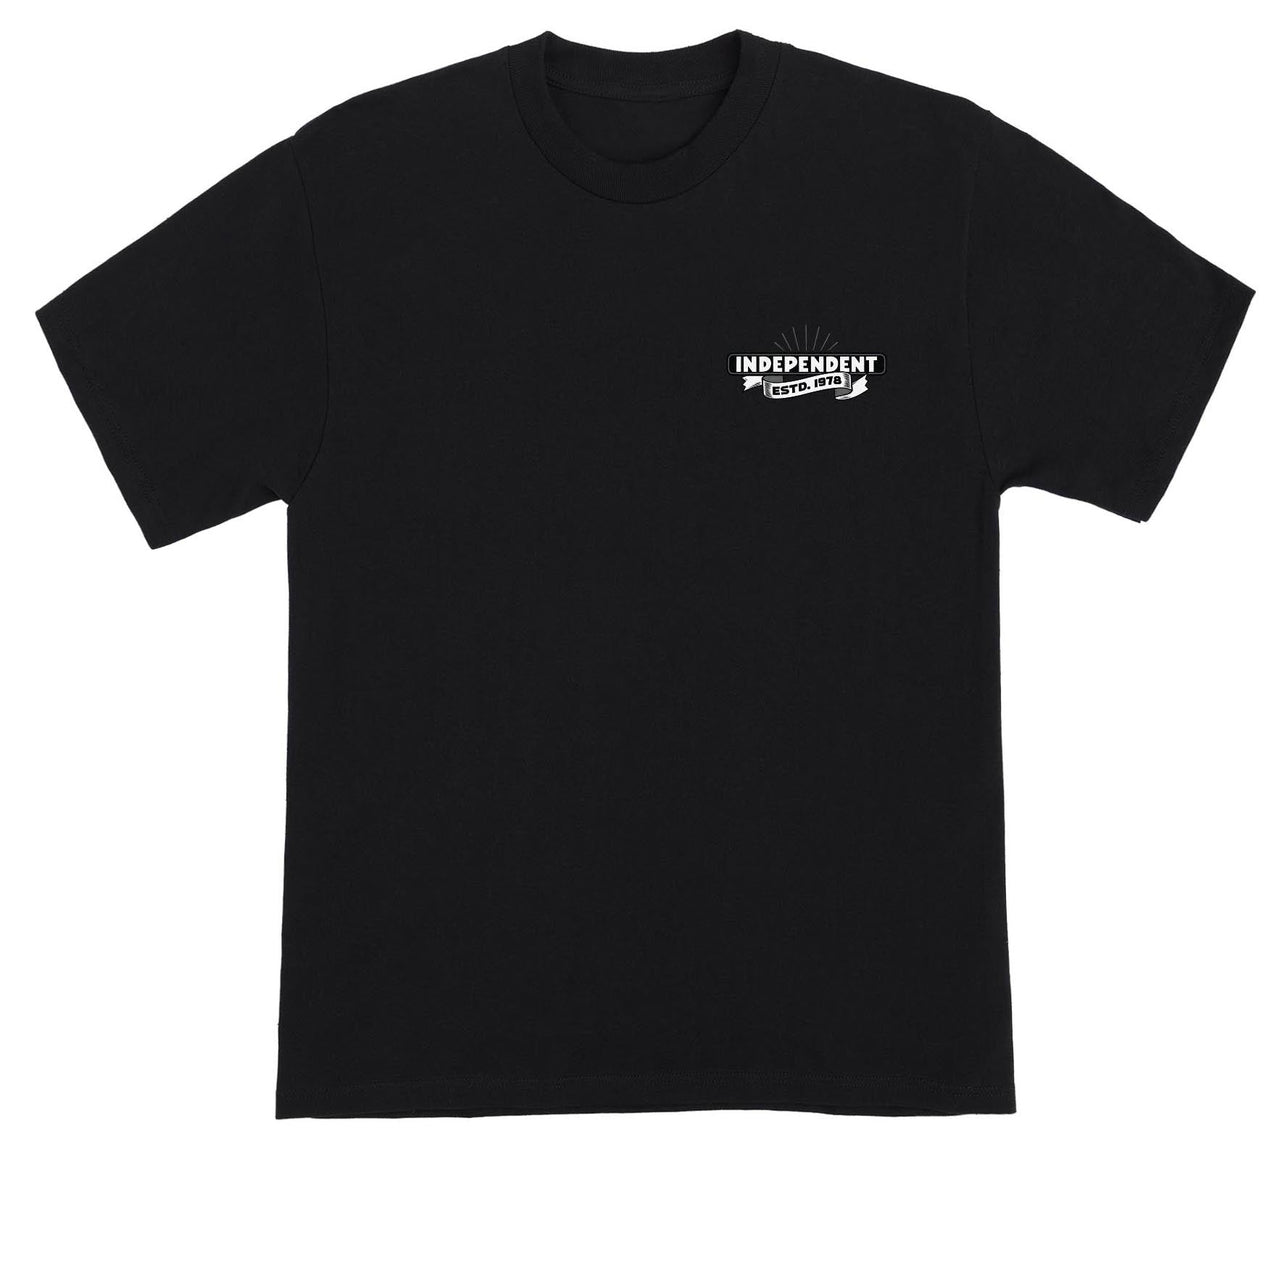 Independent RTB Sledge T-Shirt - Black image 2